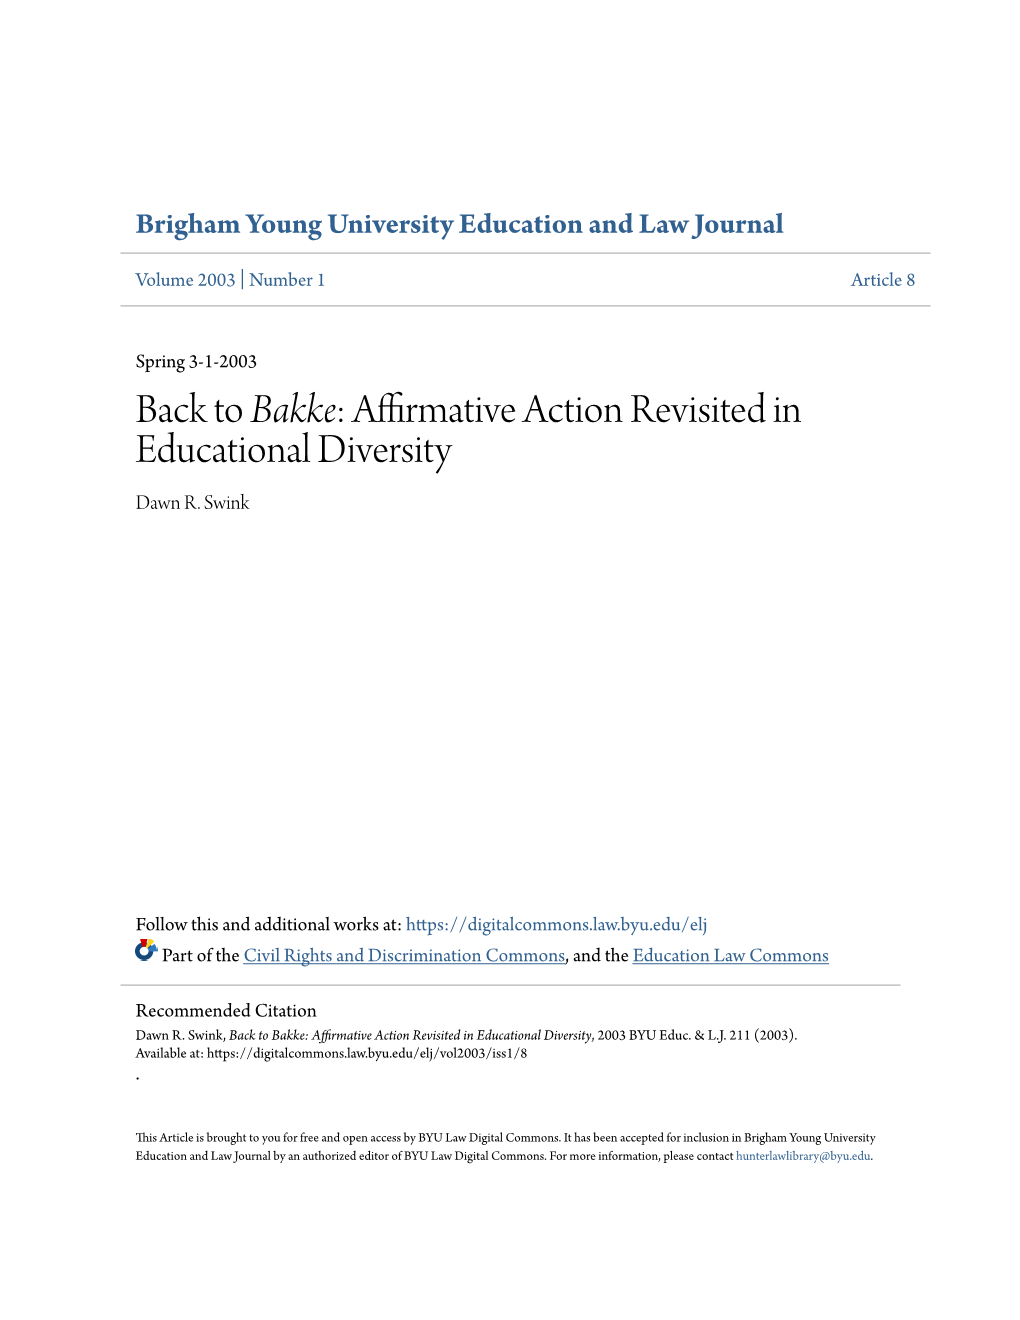 Bakke: Affirmative Action Revisited in Educational Diversity Dawn R